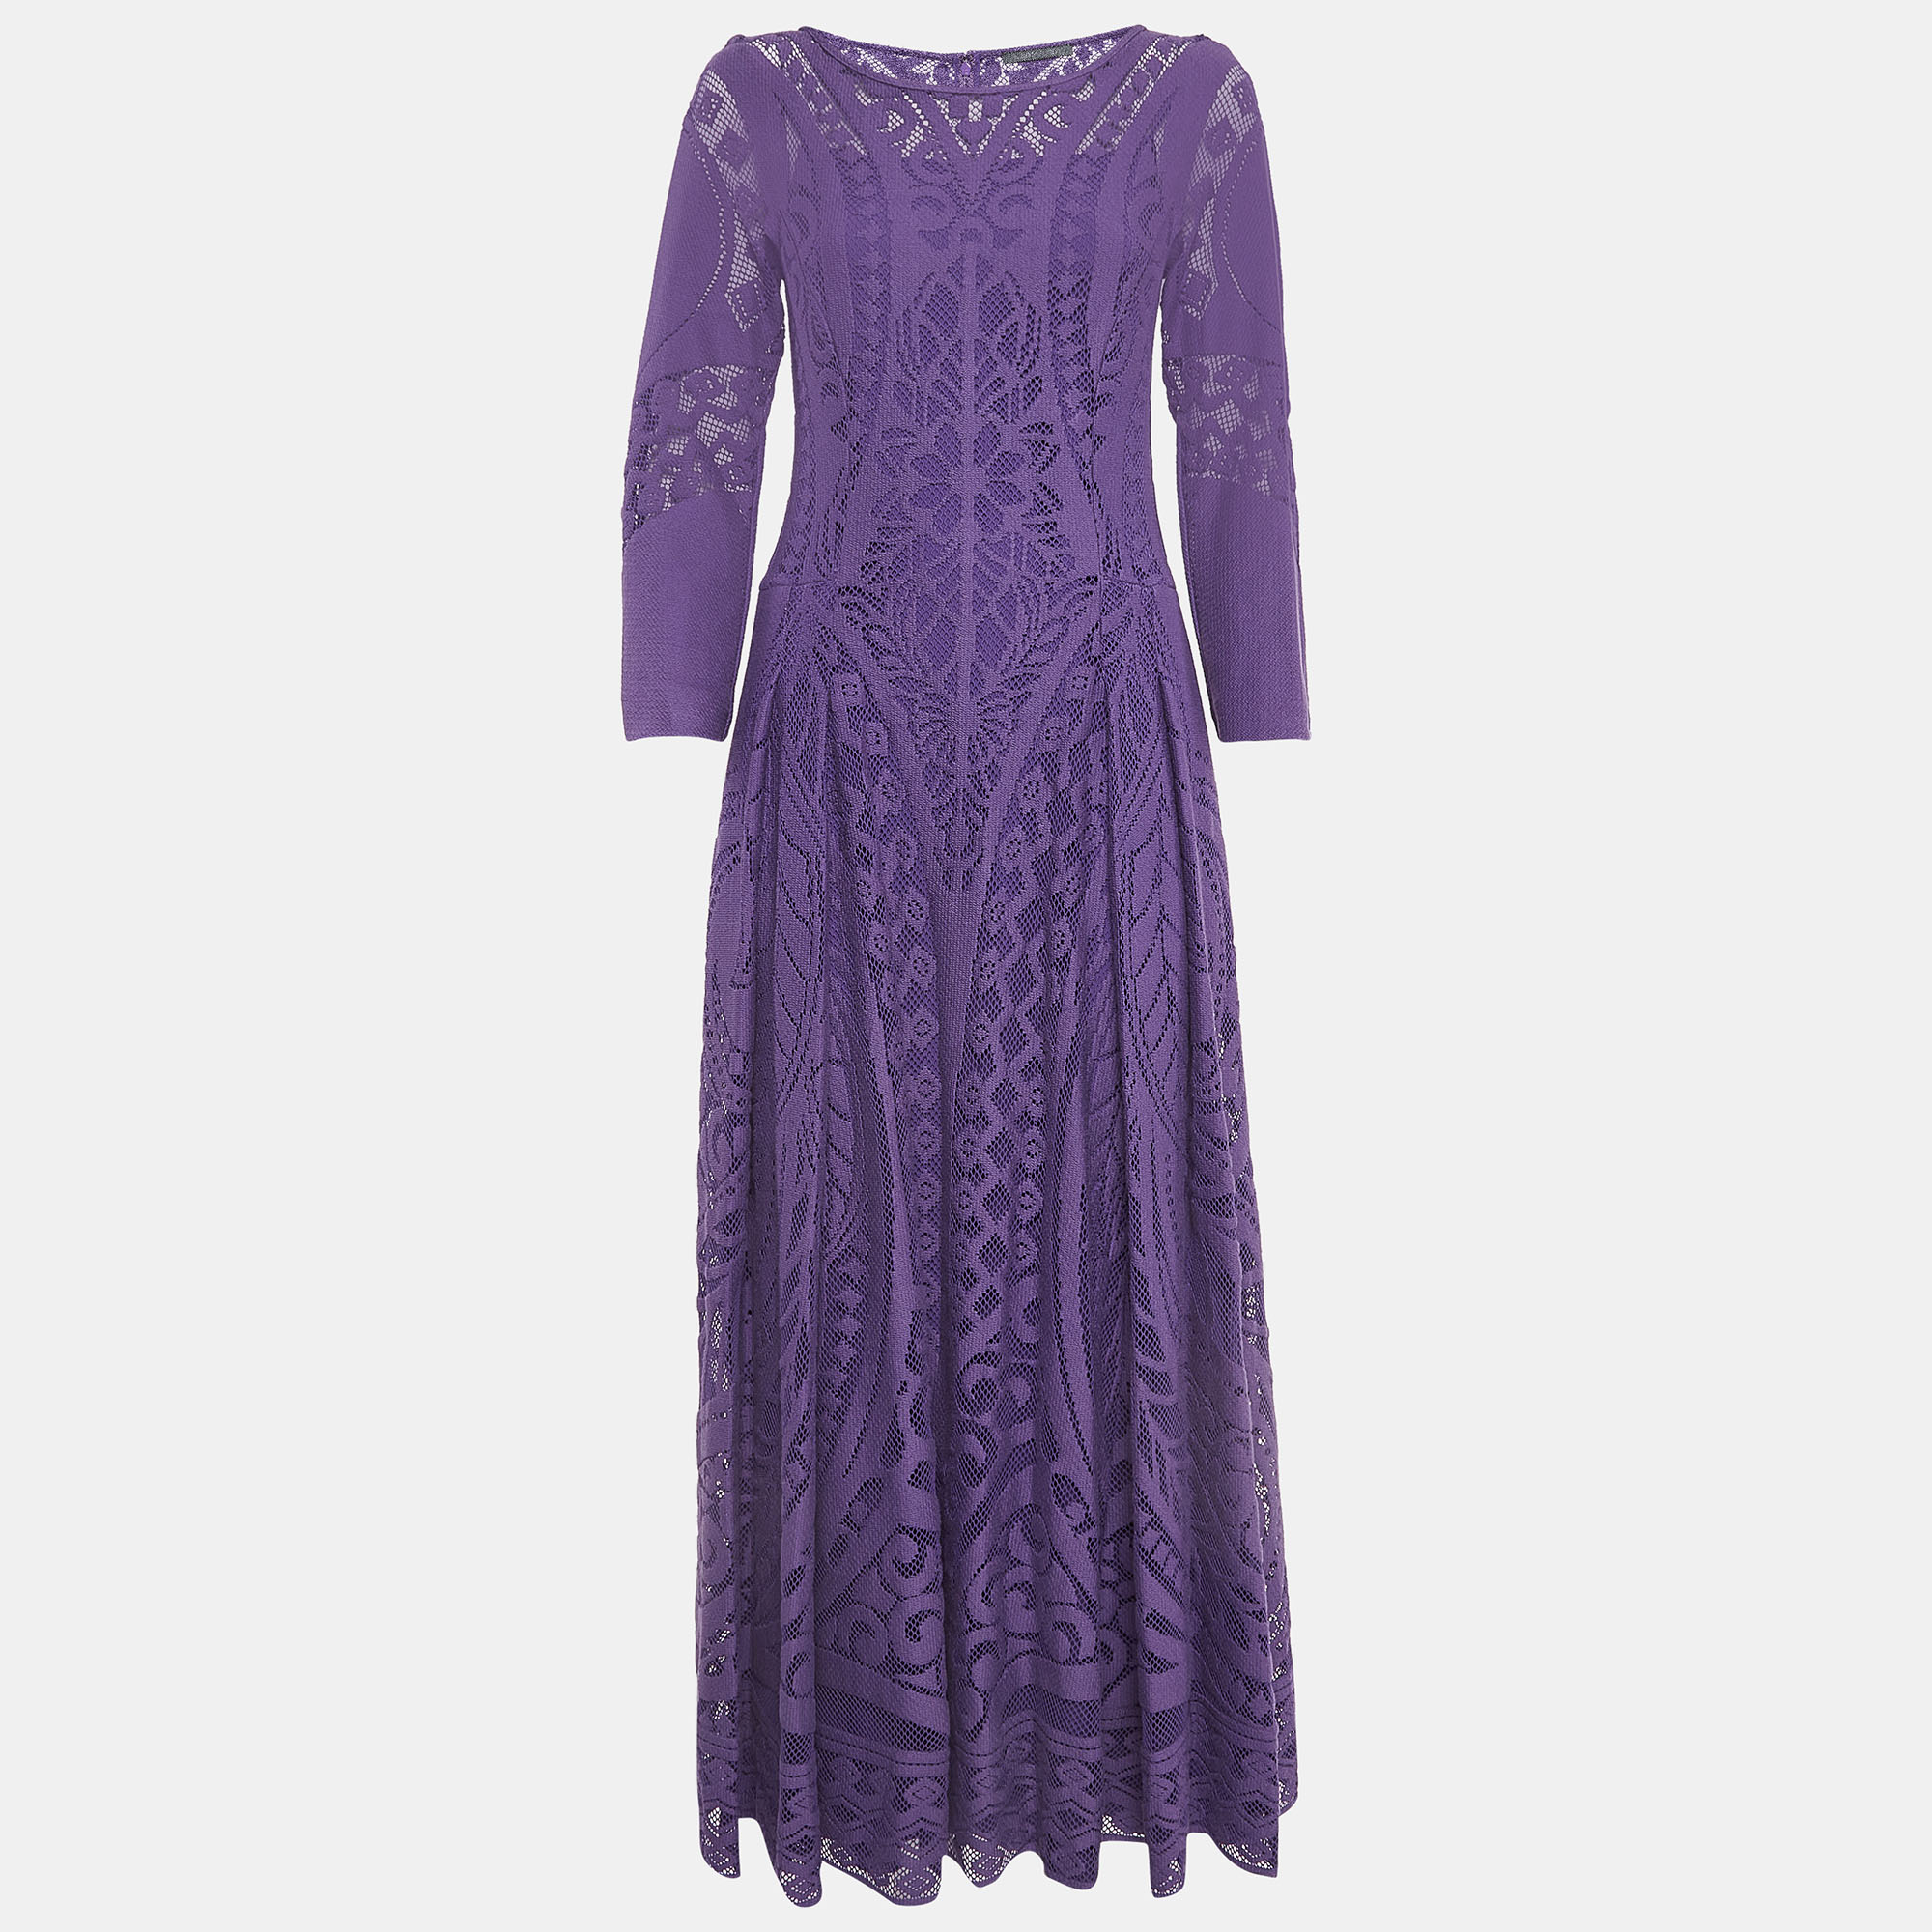 Alberta ferretti purple patterned lace maxi dress s